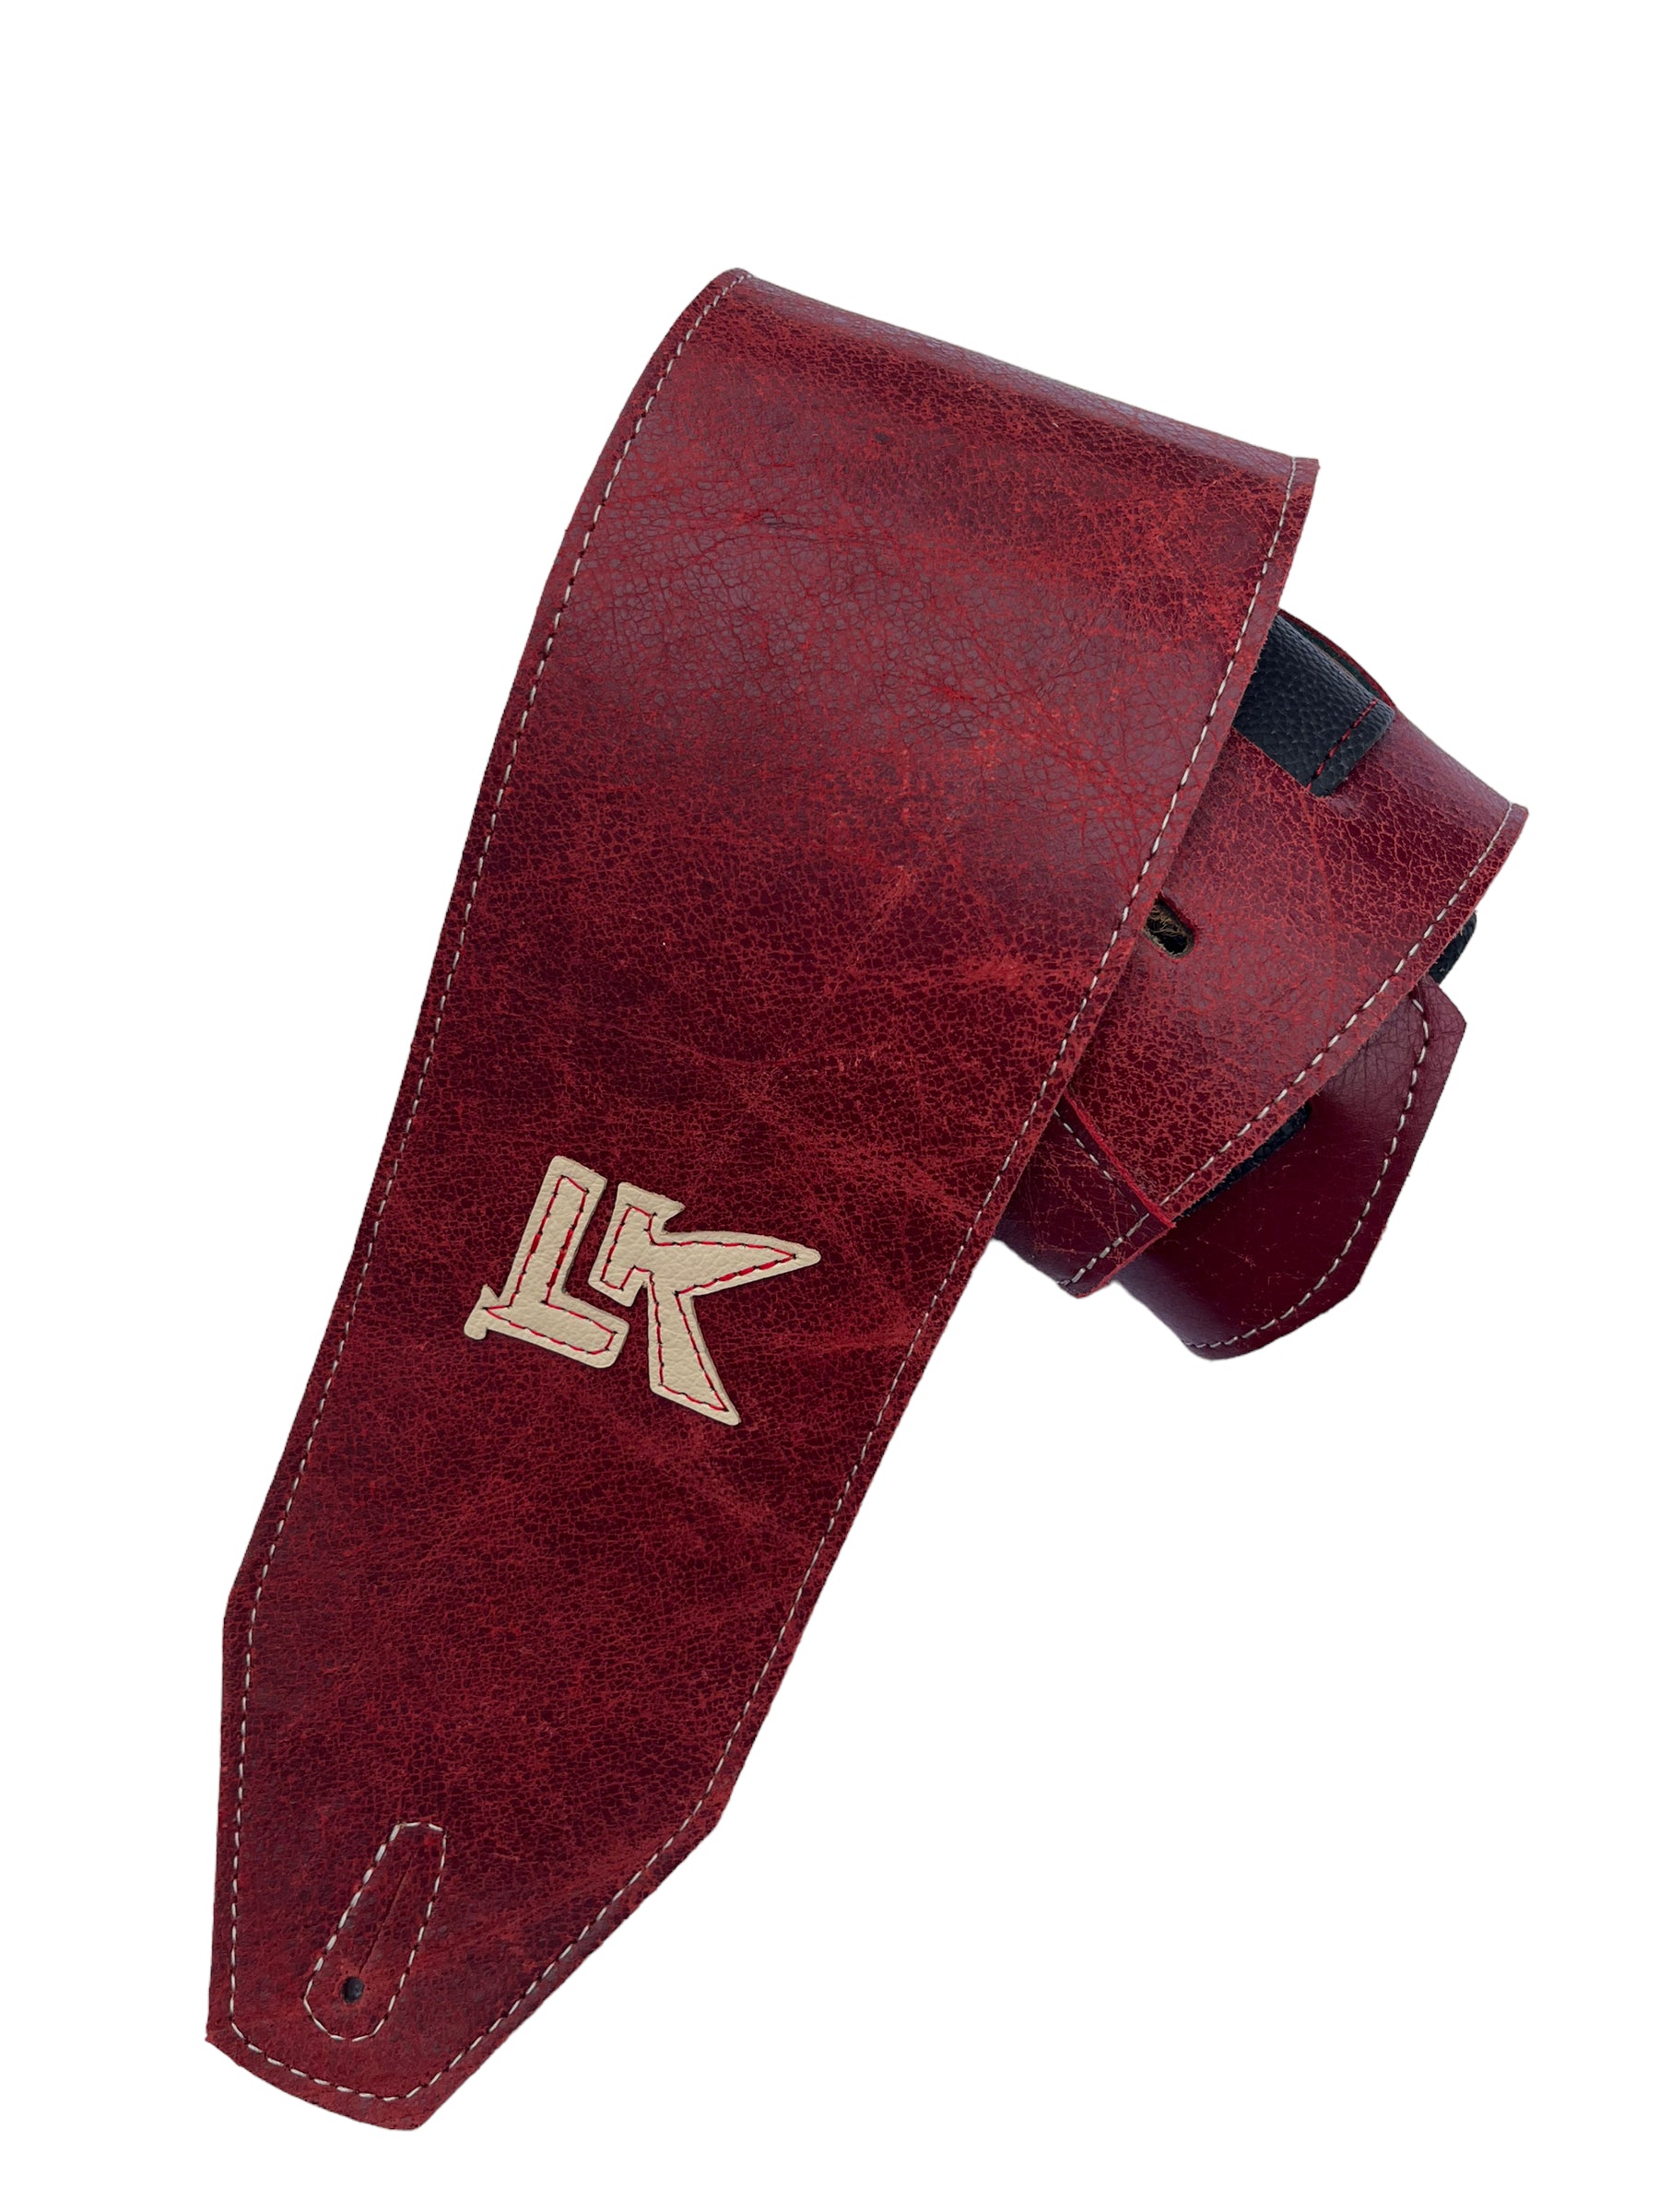 LK 4” Wide Distressed Red Strap